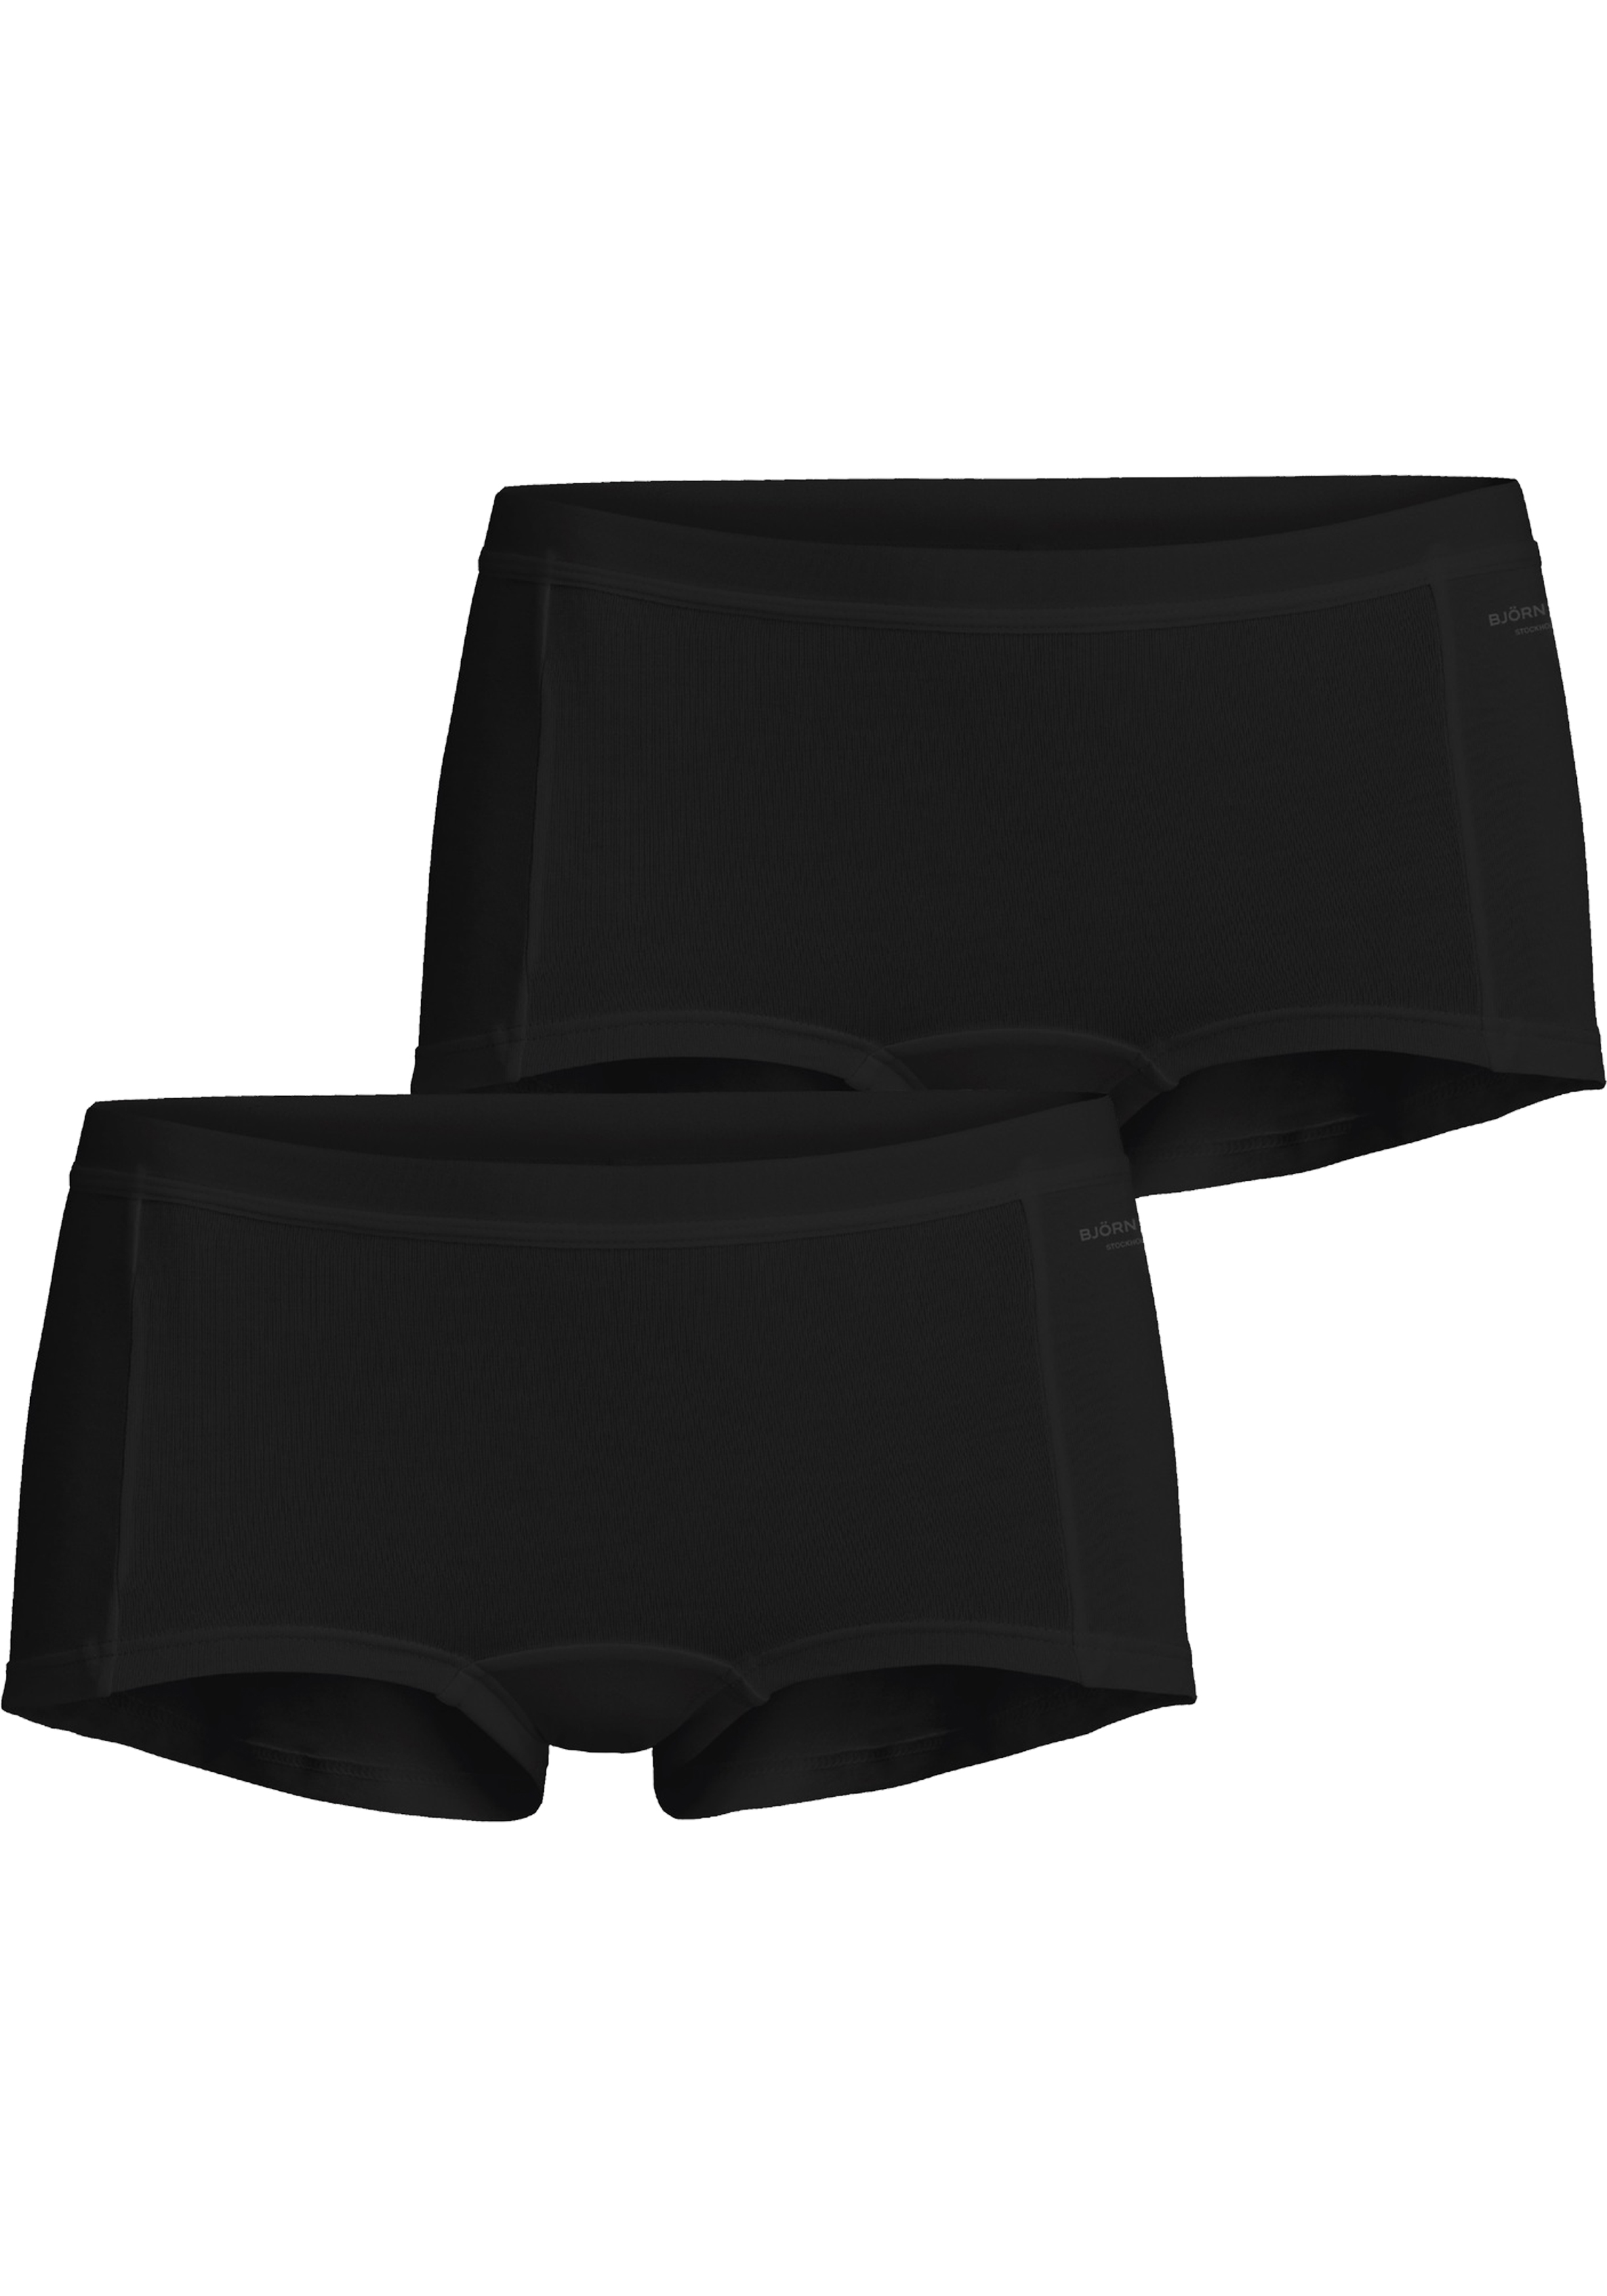 Bjorn Borg dames Core minishorts, boxers korte pijpen (2-pack), zwart